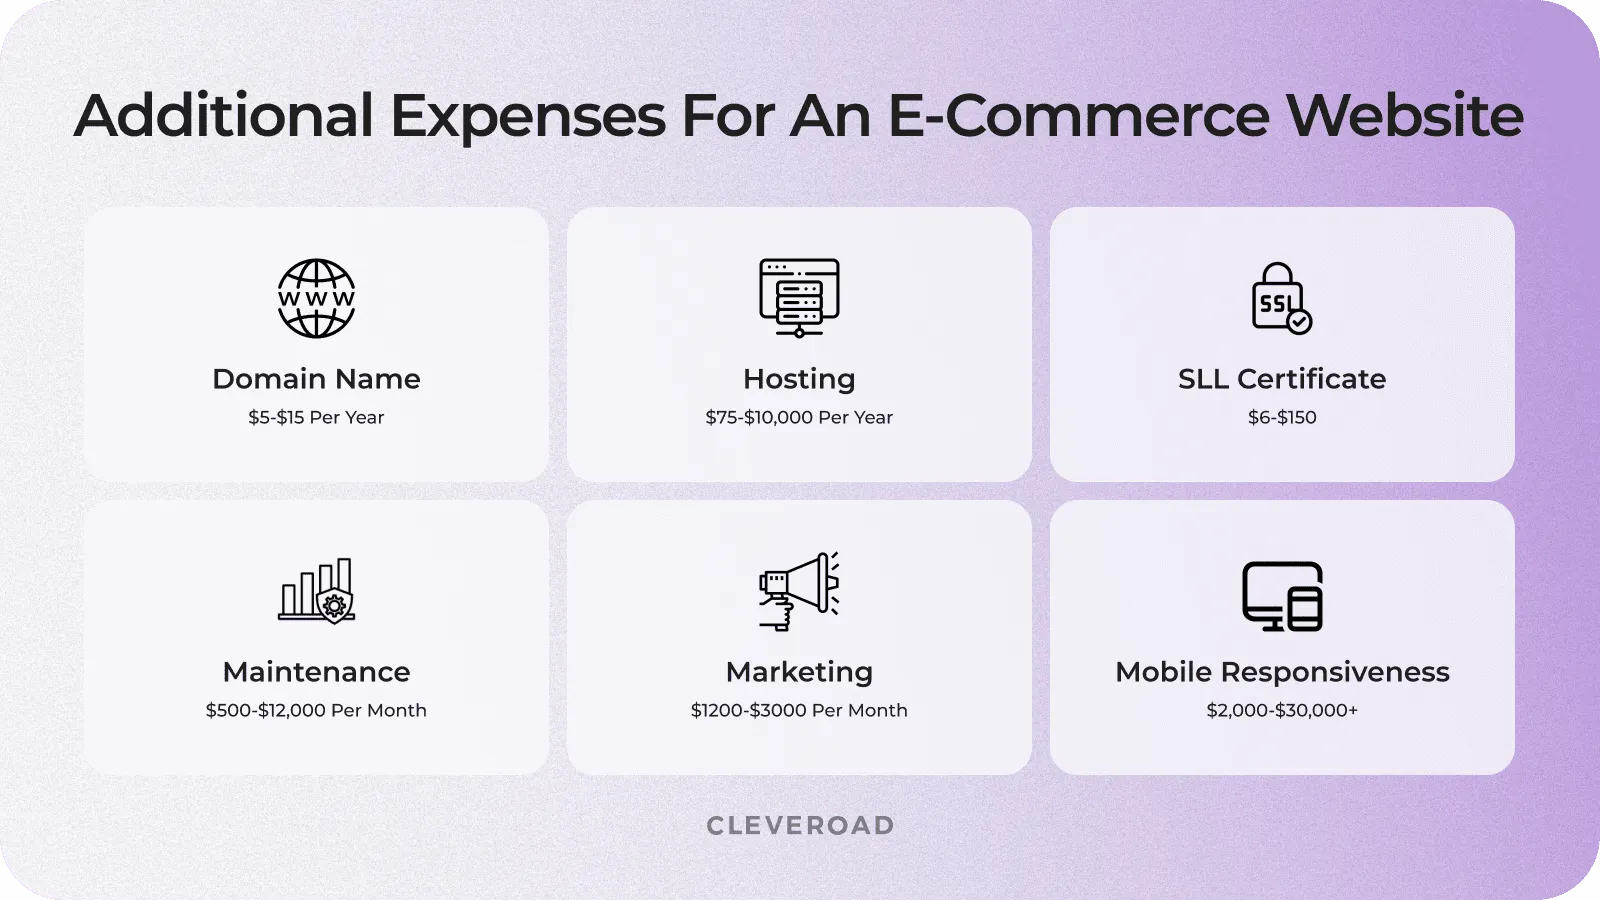 Extra e-commerce website expenses